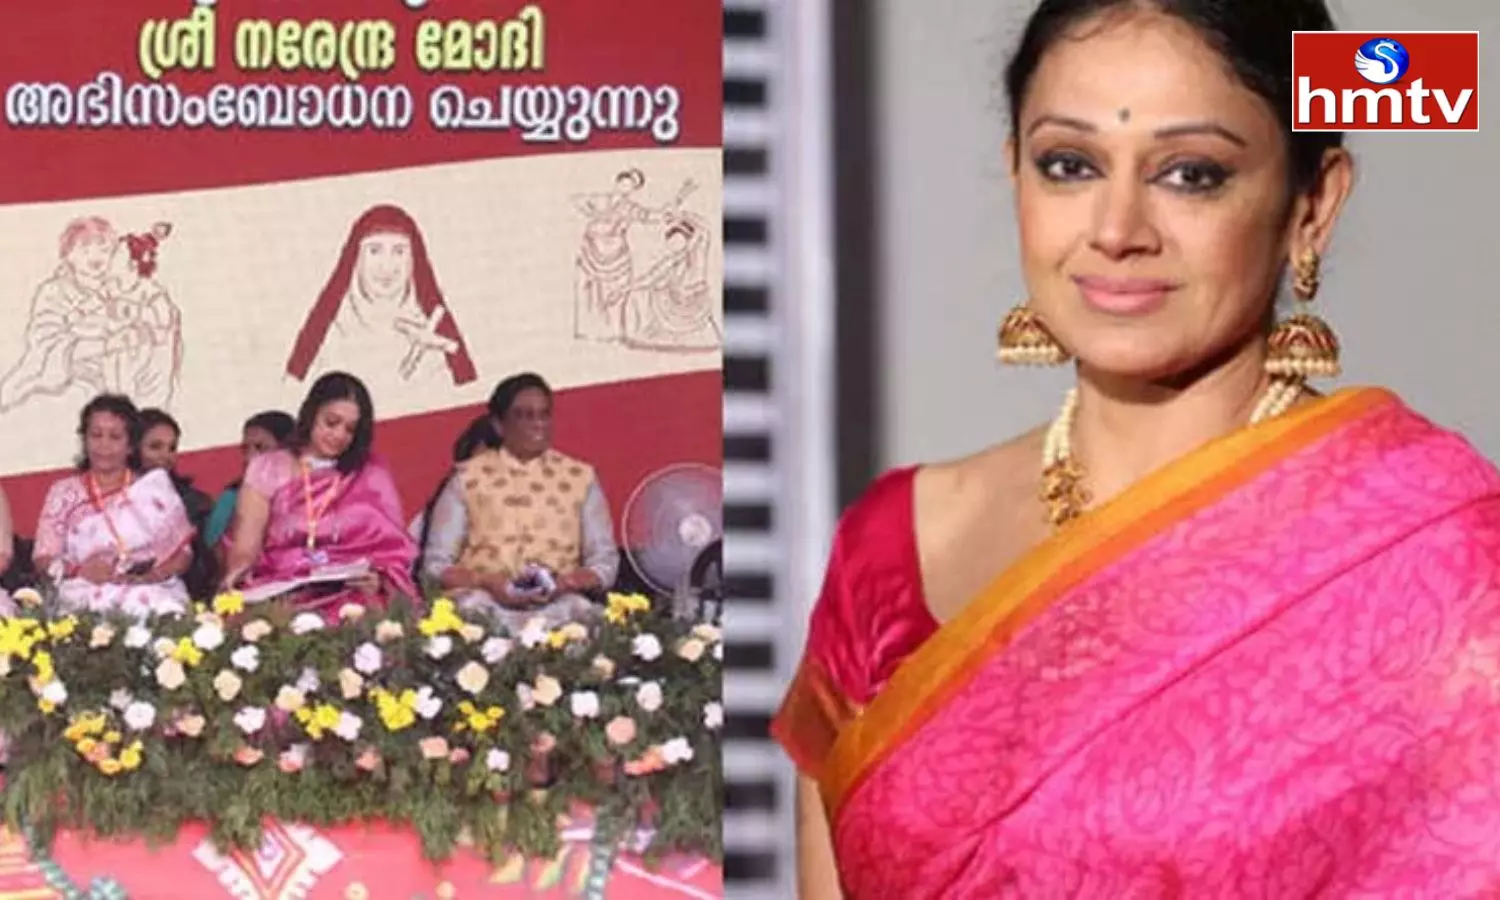 Film Star Shobana May Contest Lok Sabha Seat From Kerala